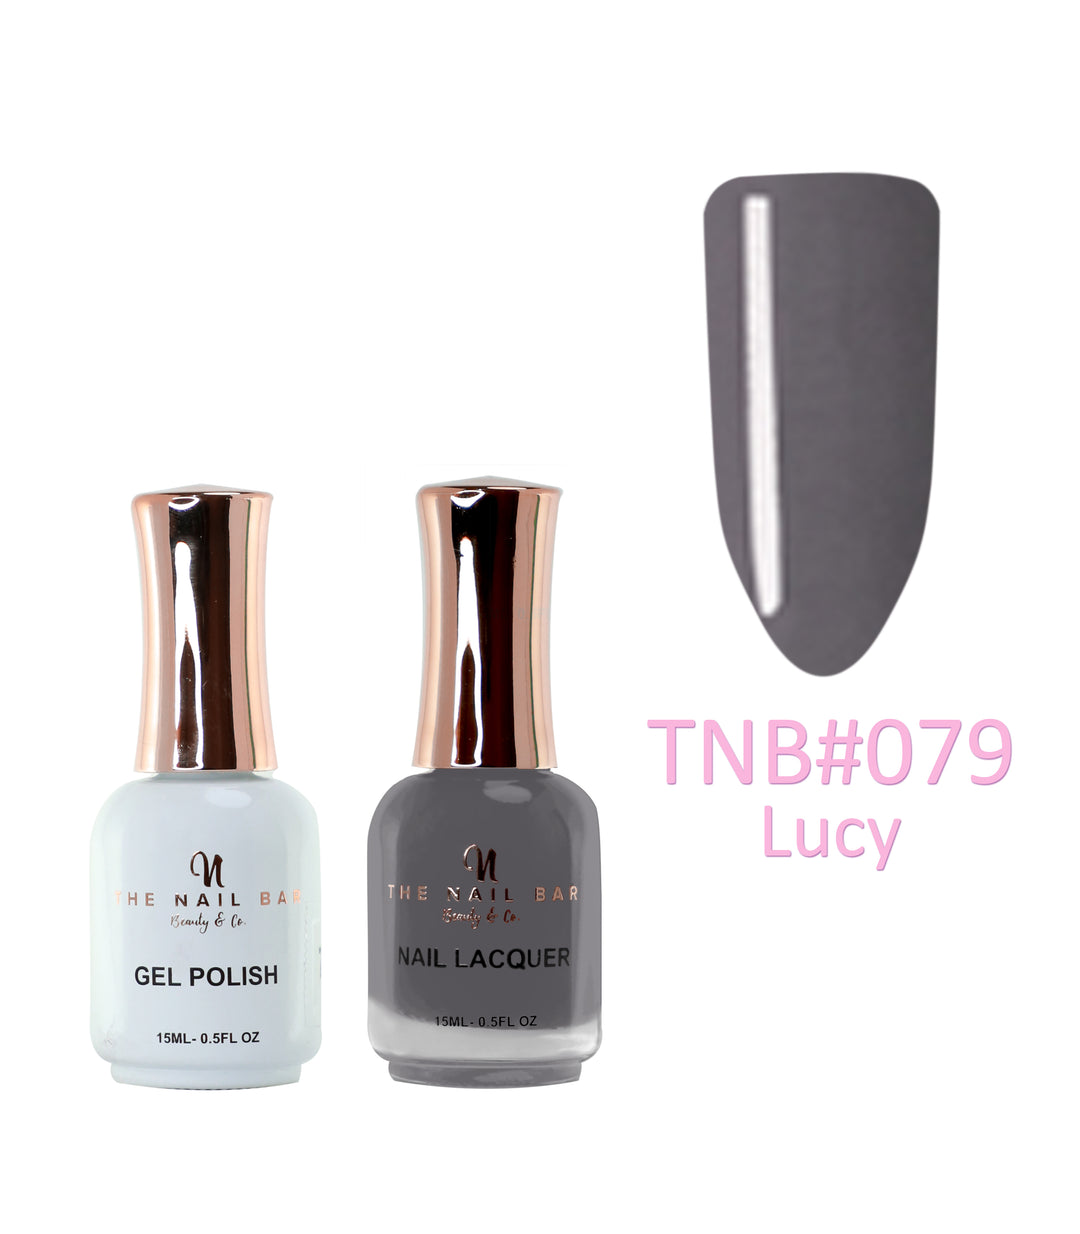 Dual Polish/Gel colour matching (15ml) - Lucy - The Nail Bar Beauty & Co.